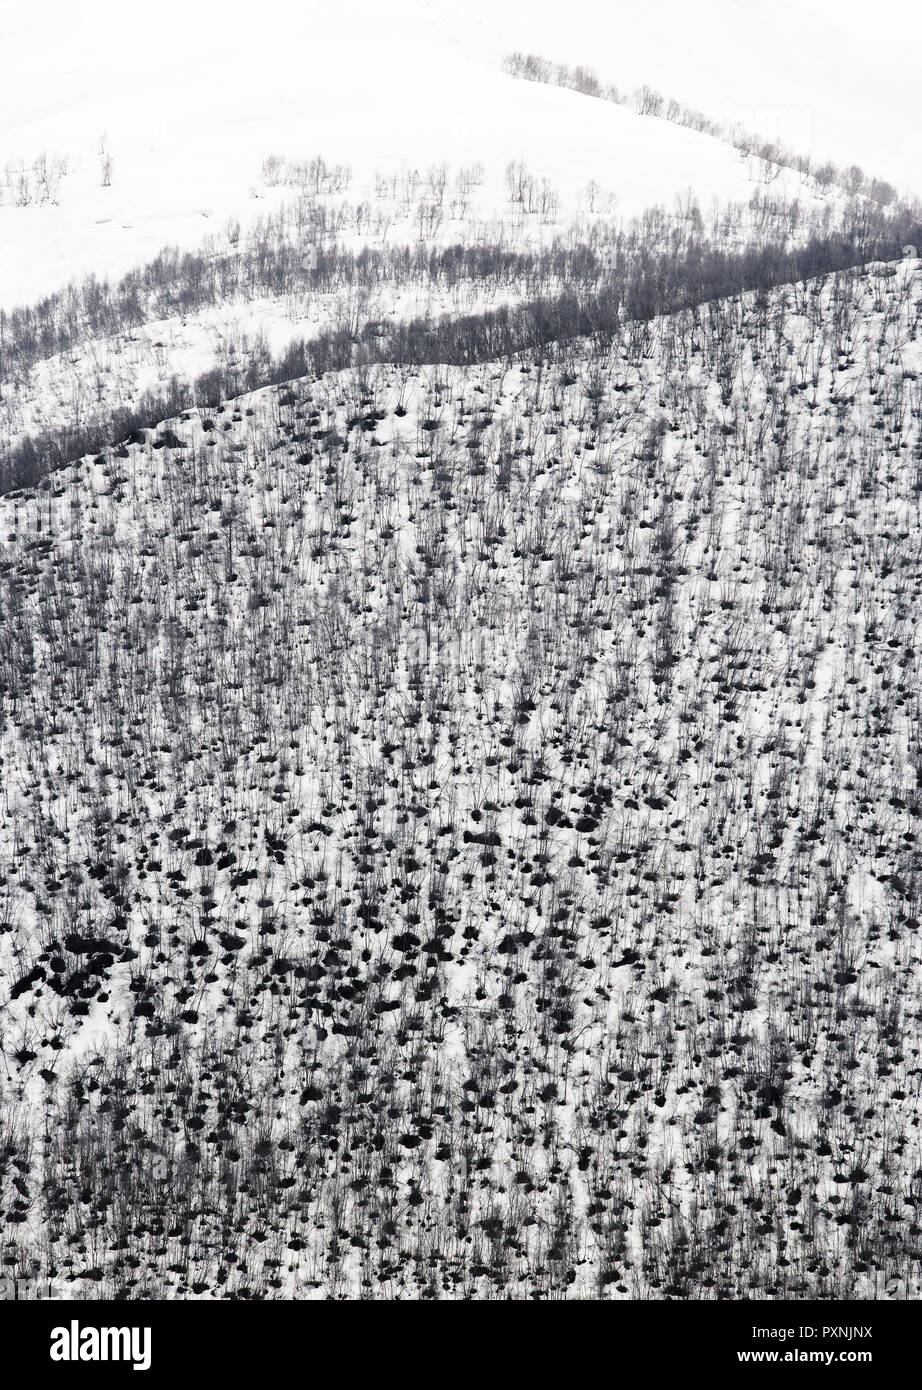 Georgia, Ushguli,  Greater Caucasus covered in snow Stock Photo